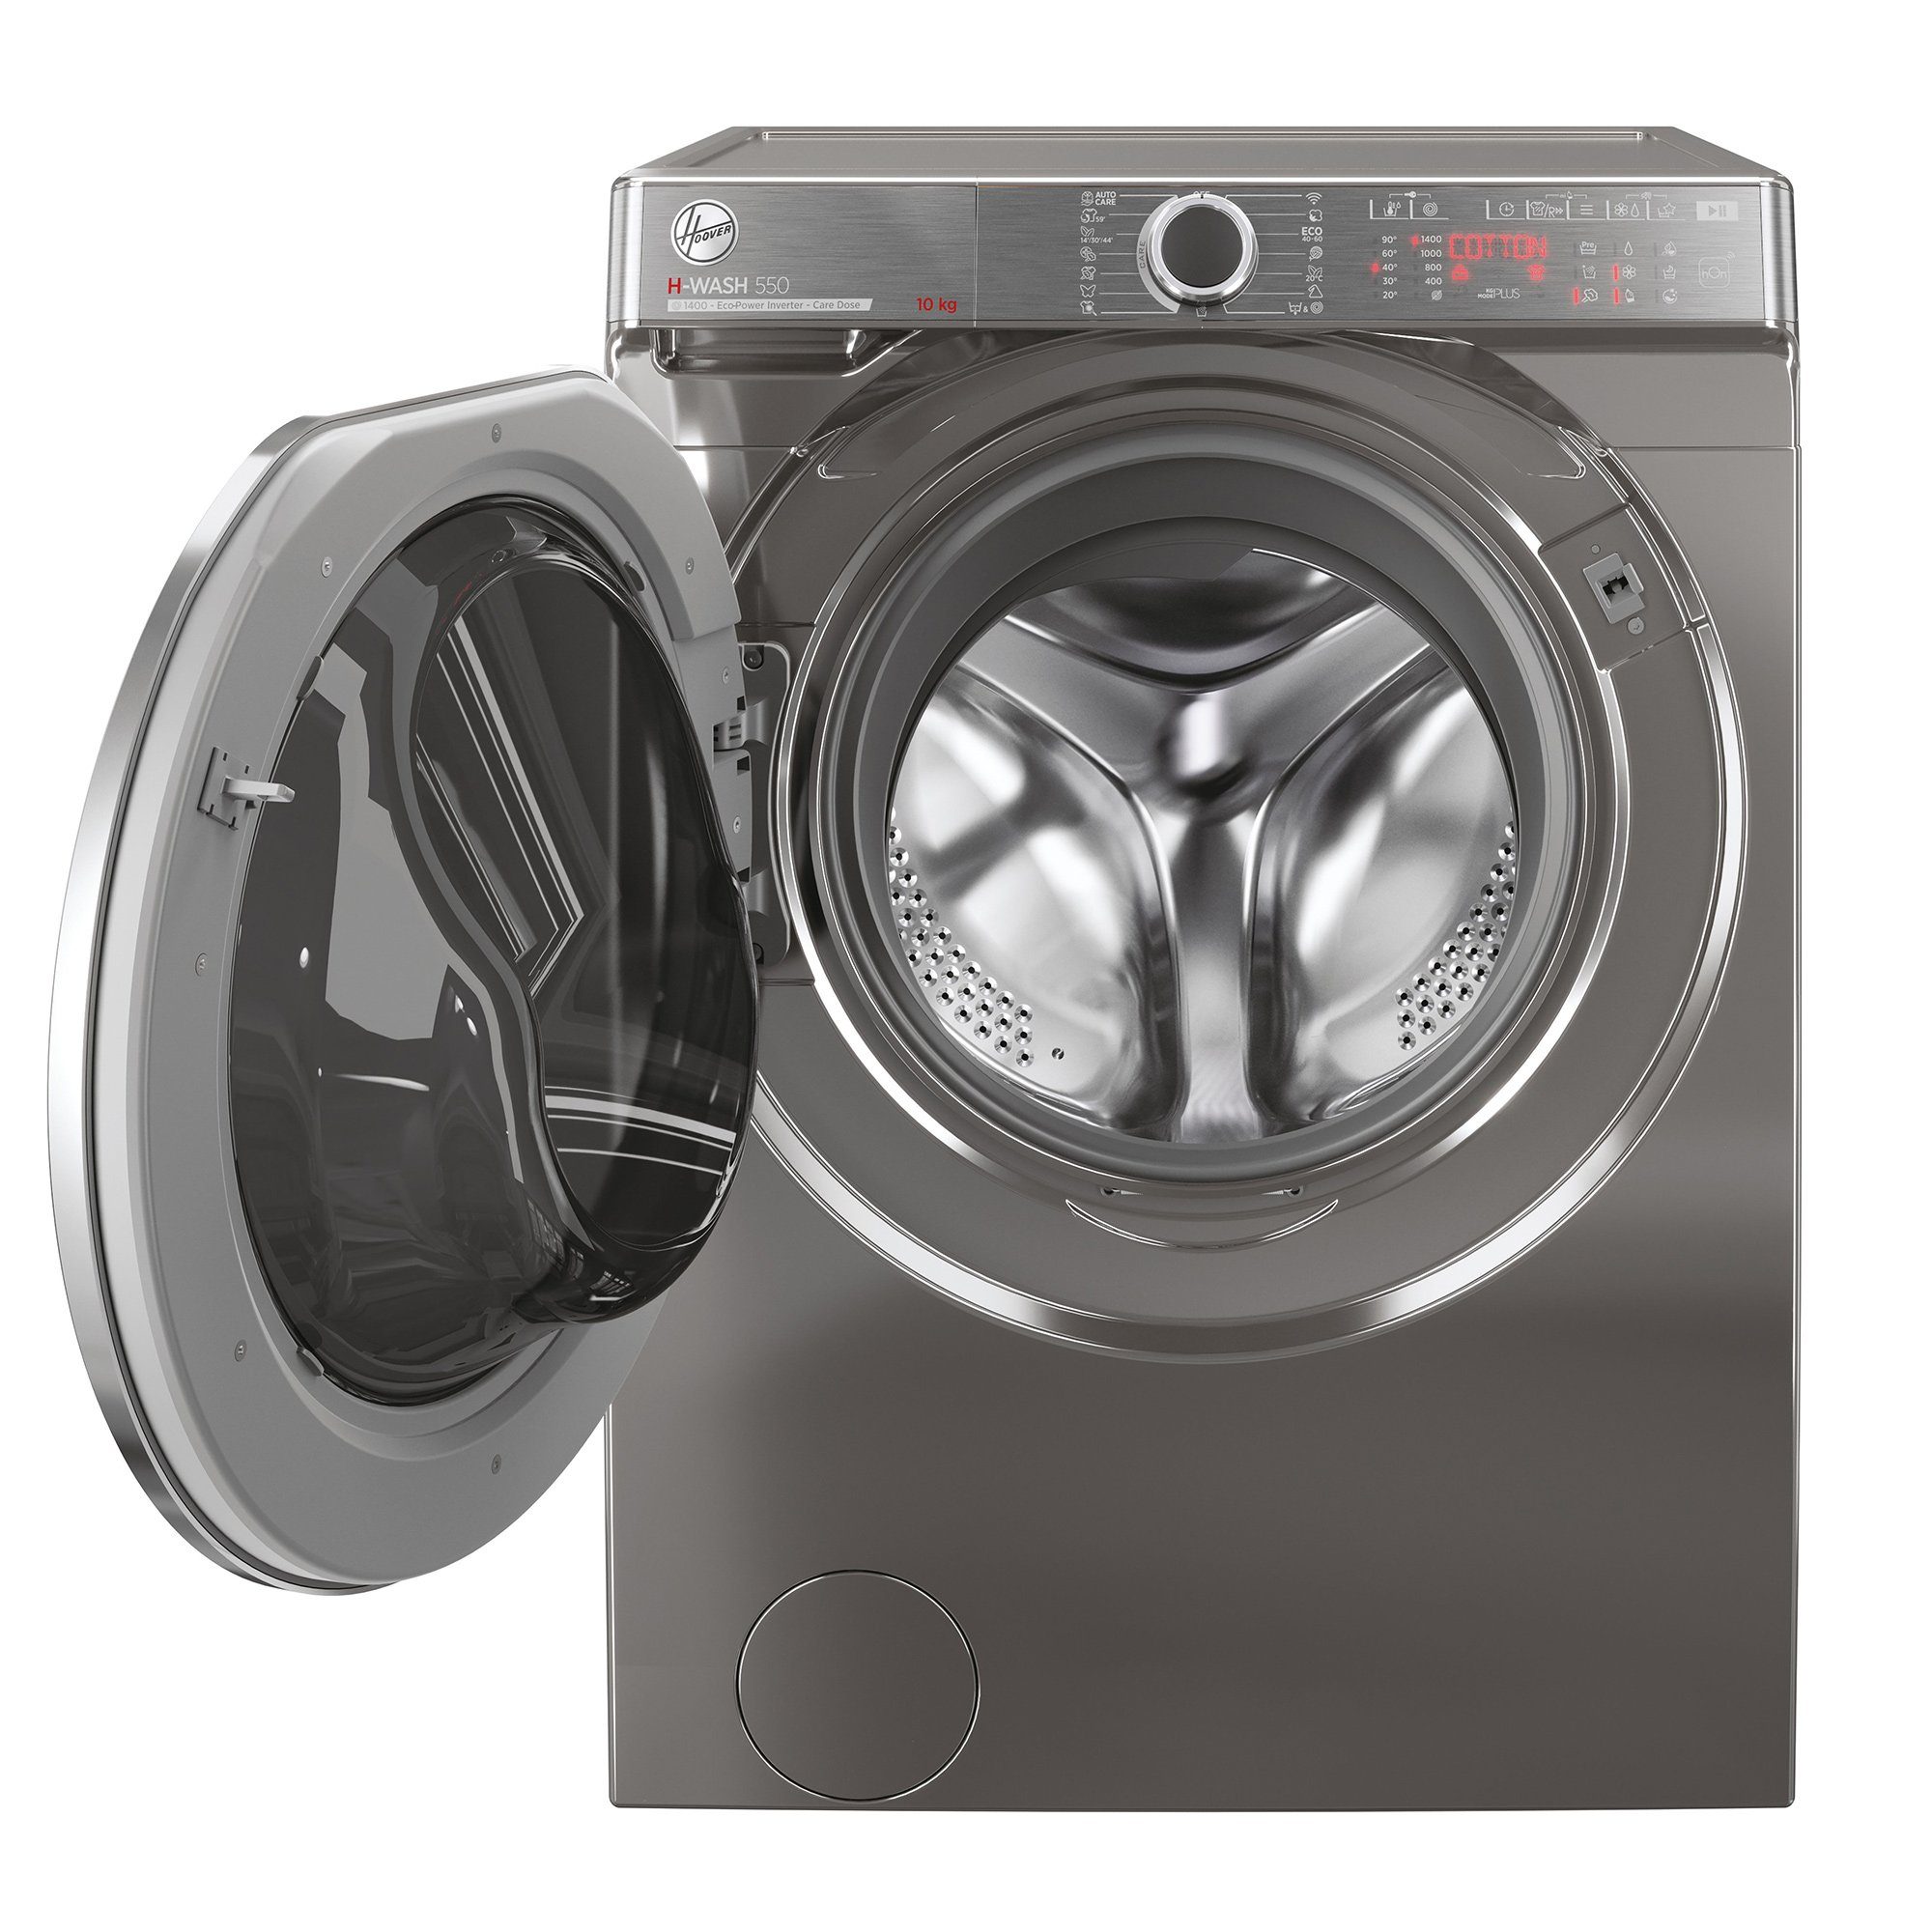 Hoover Waschmaschine H-WASH / Care, App hOn Wi-Fi 10 H5WPBD410AMBCR/S, 550 Mengenautomatik Expert + Design U/min, ActiveSteam, Power Bluetooth, kg, 1400